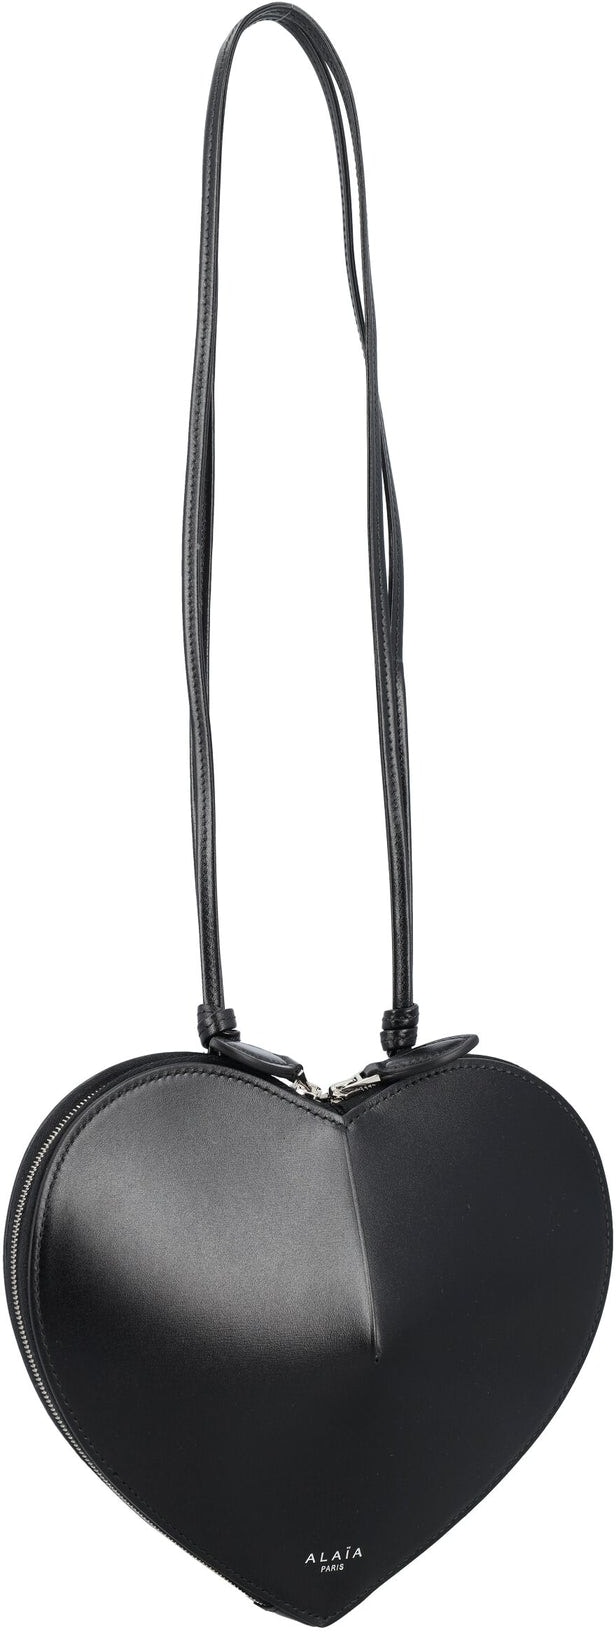 Le Coeur Leather Shoulder Bag in Black - Alaia